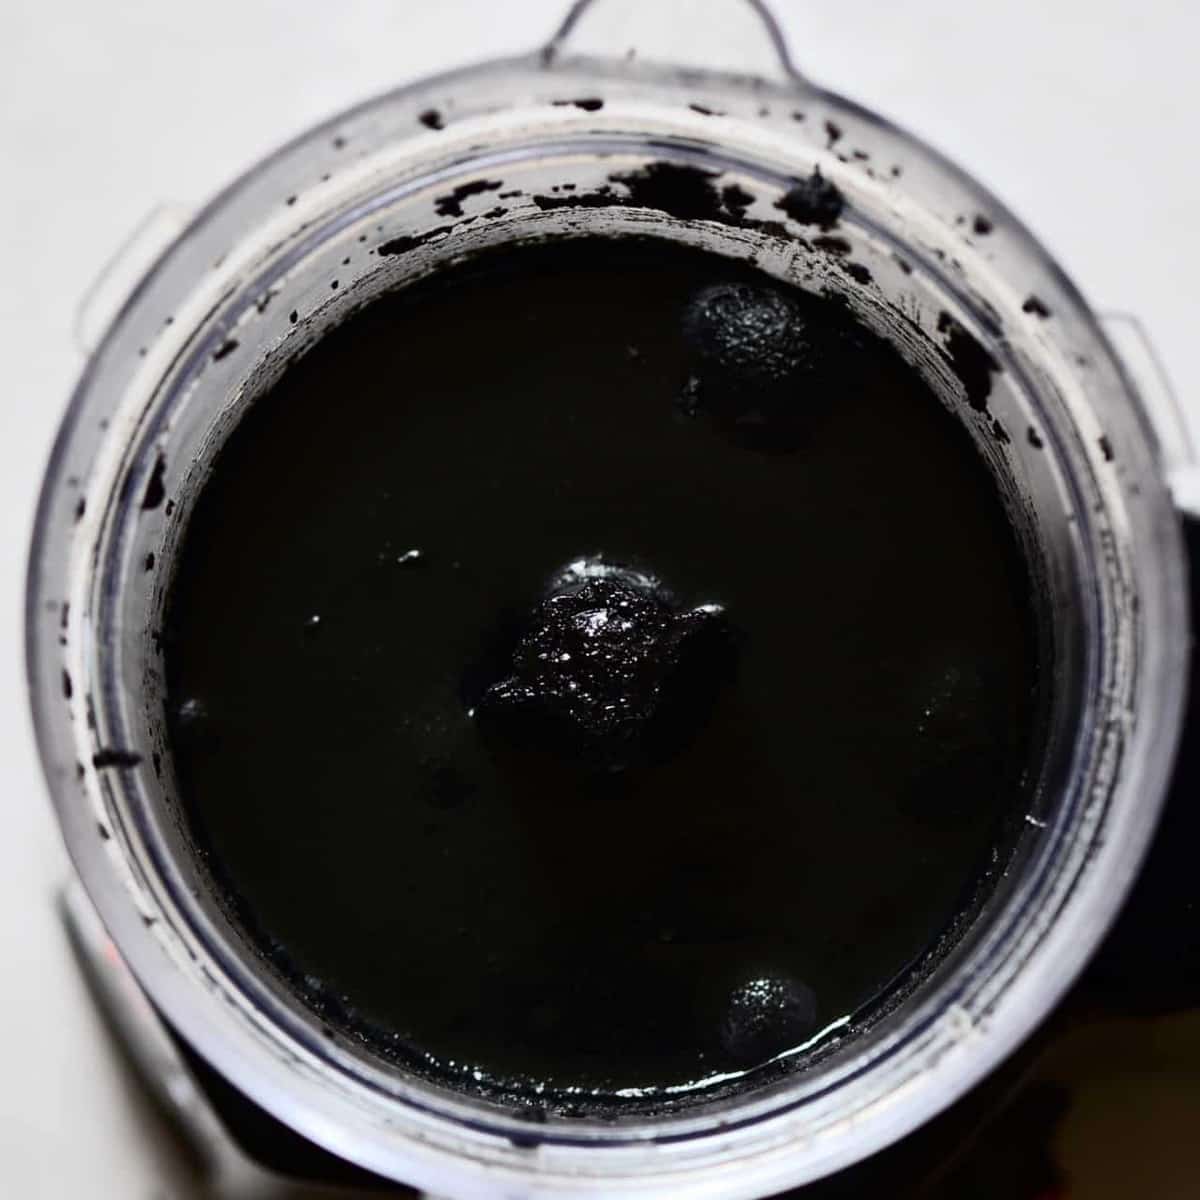 making homemade black tahini. black foods for halloween. black sesame seeds. two ingredient homemade black tahini